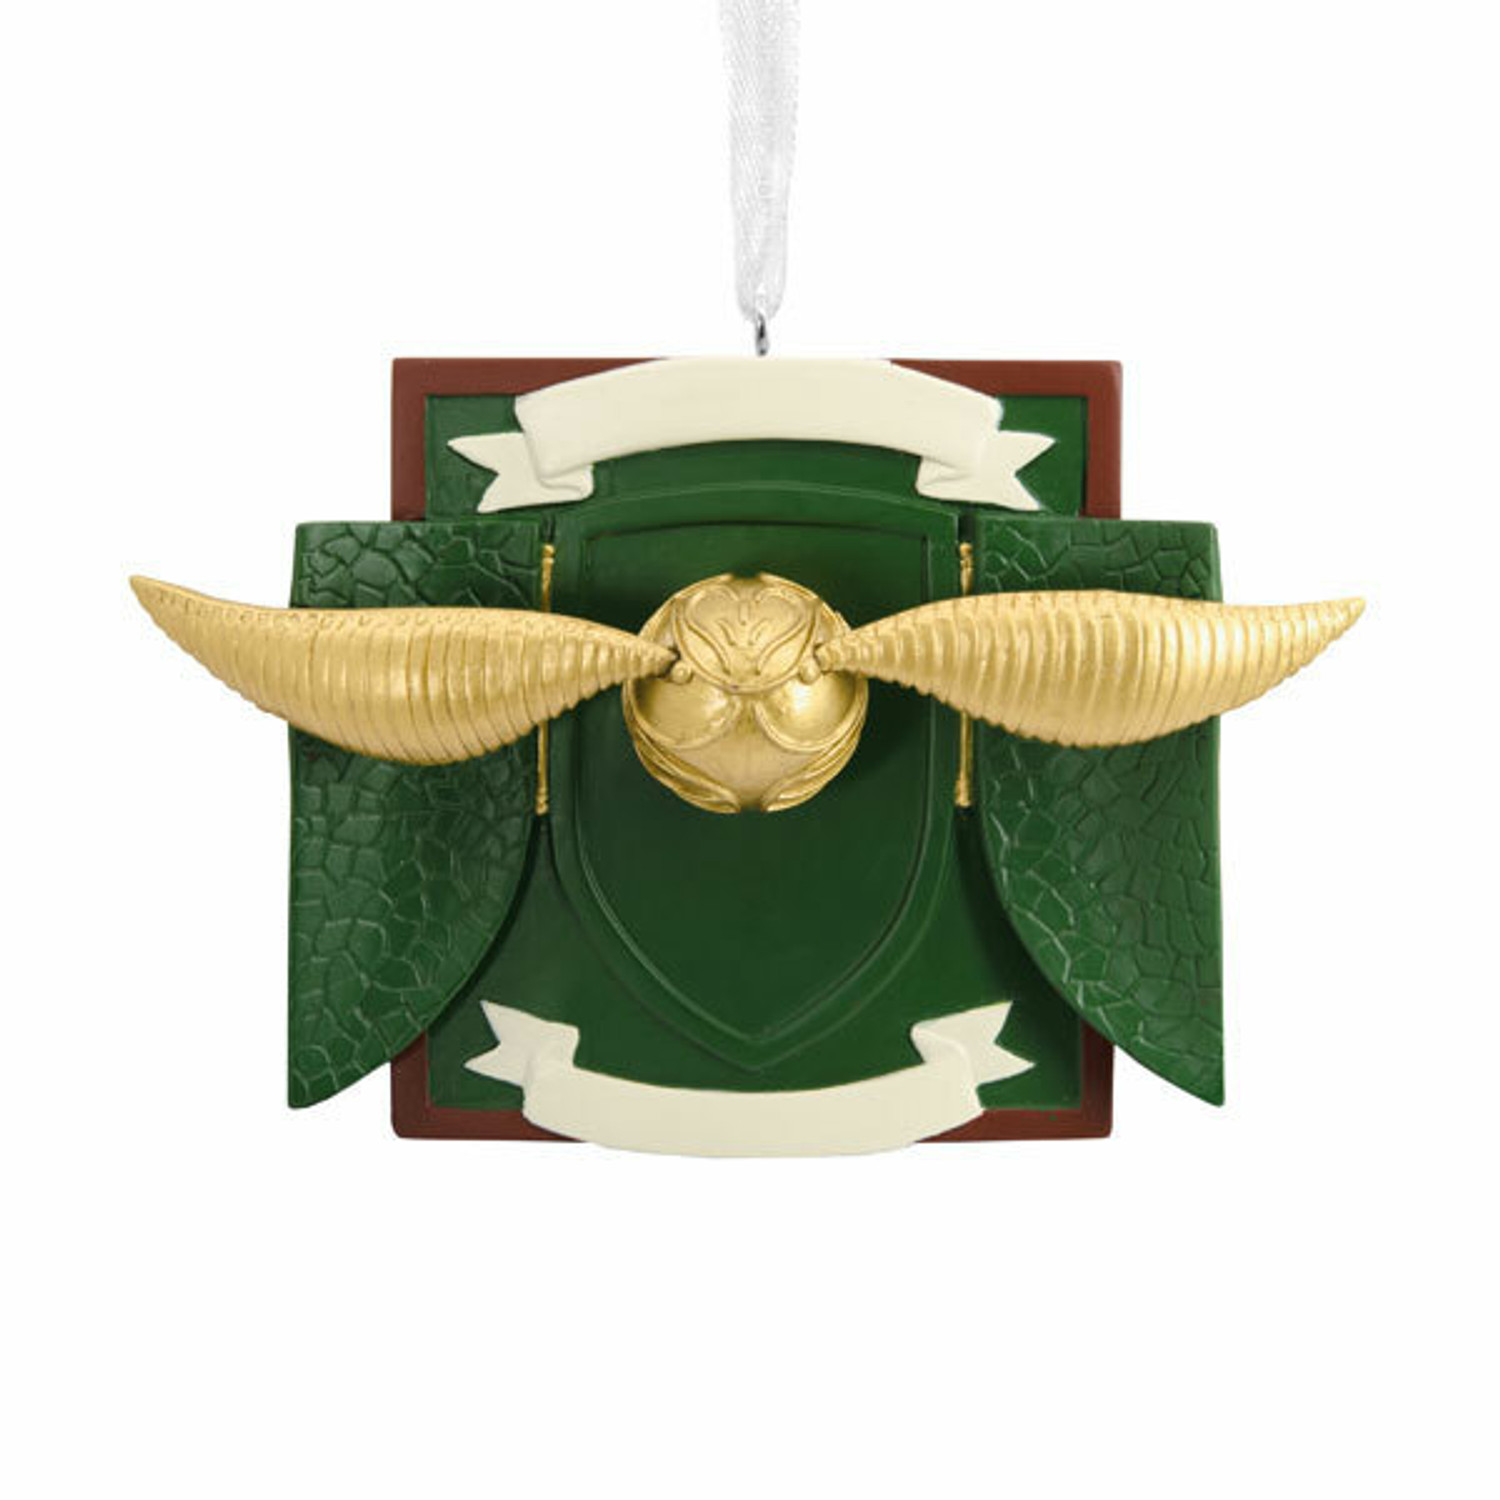 Harry Potter Christmas Ornament 